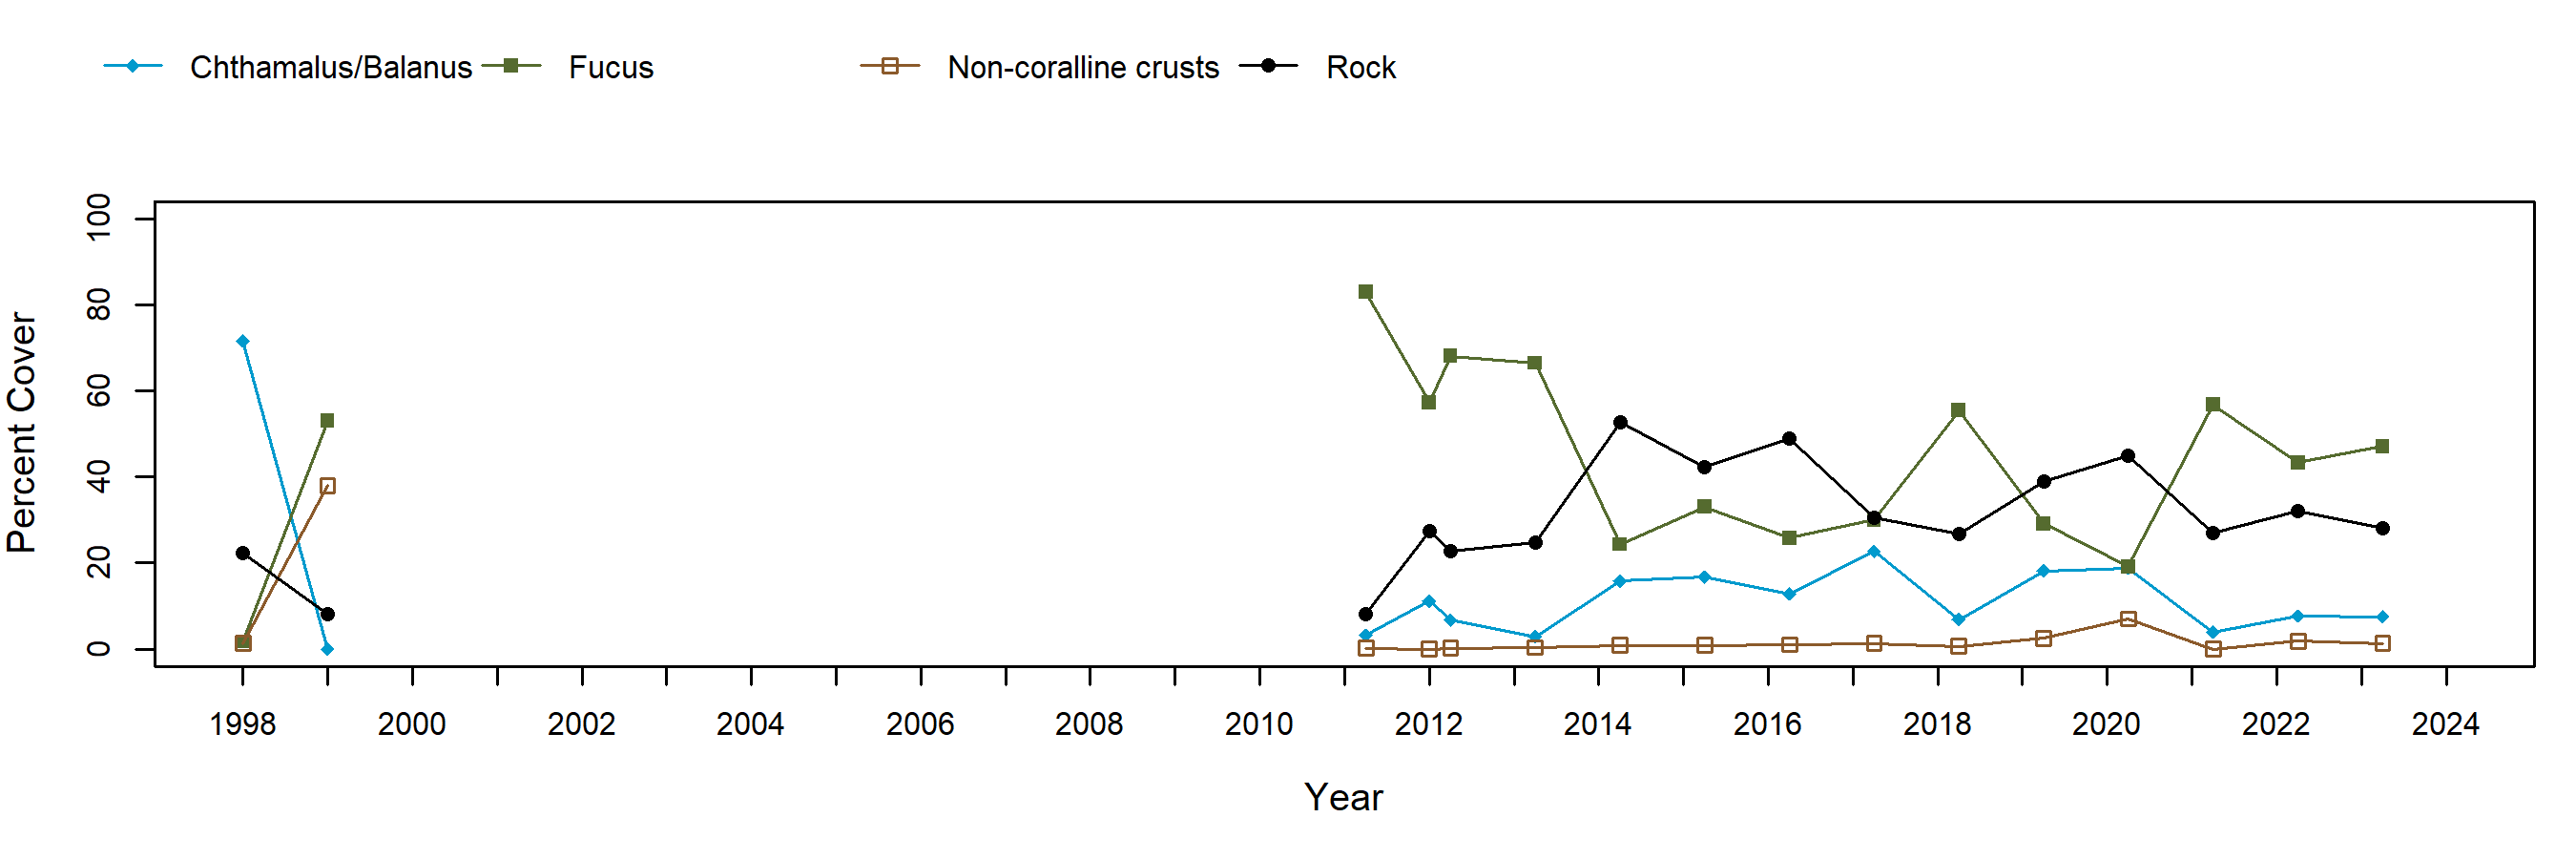 Sage Rock Fucus trend plot